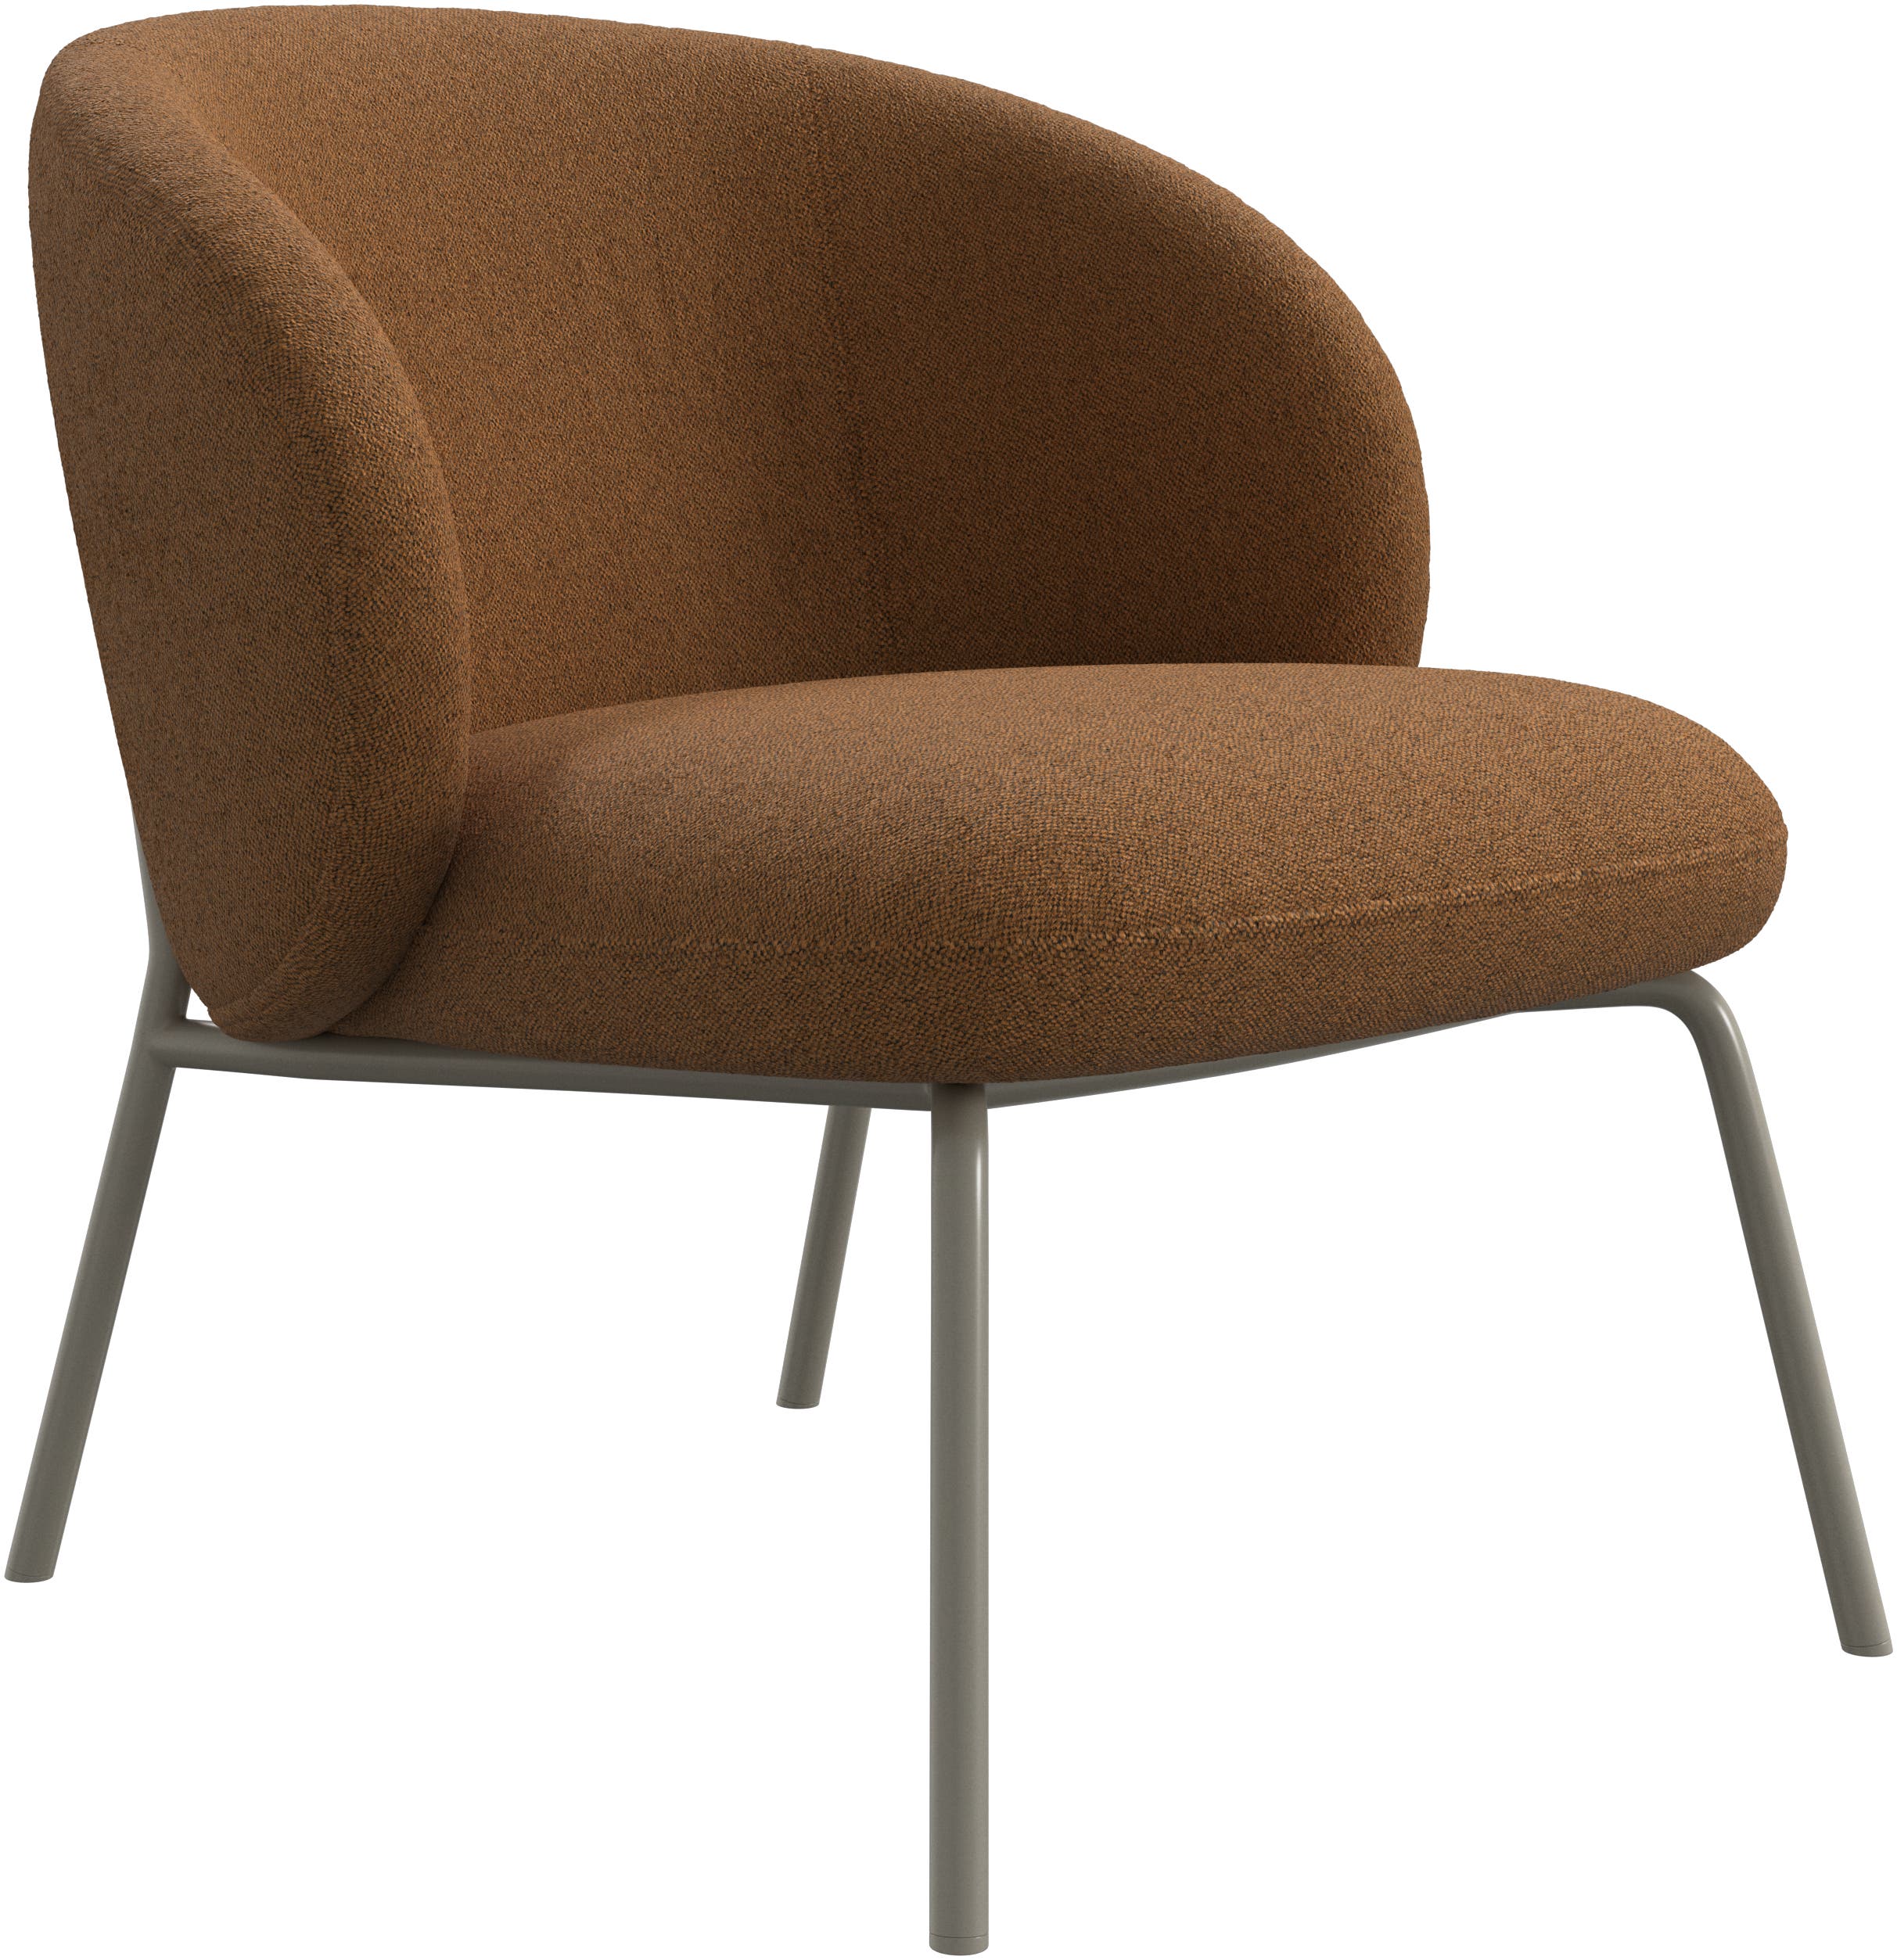 The Princeton chair | Danish furniture design | BoConcept